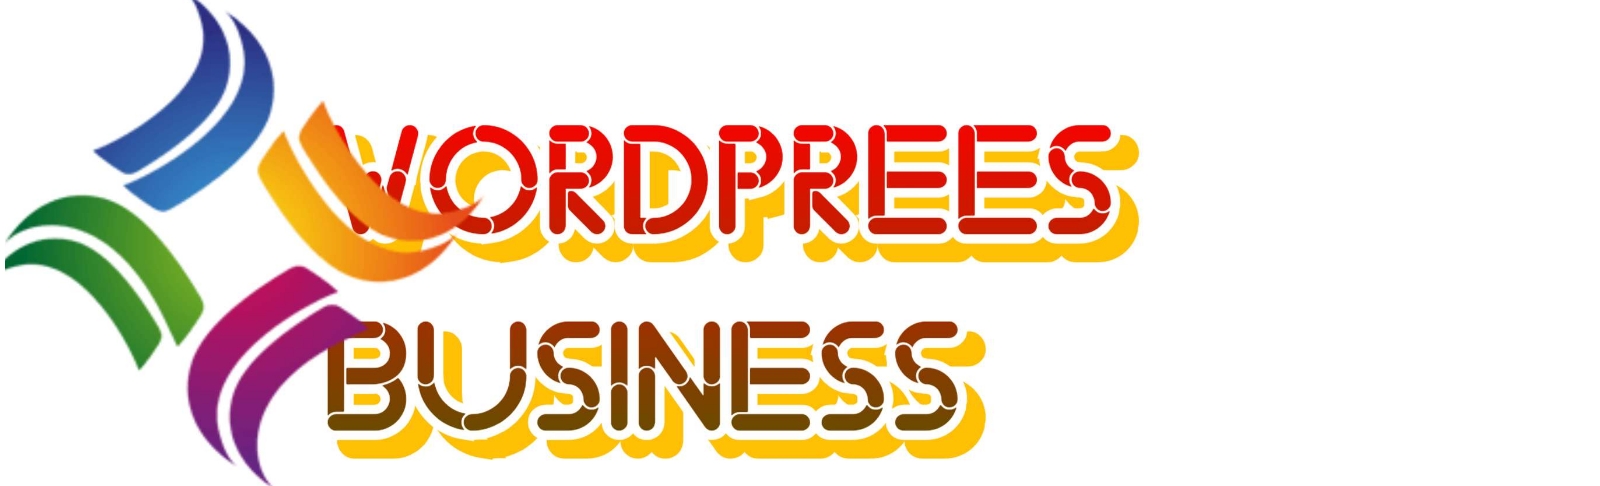 Wordpress Business|Down4files